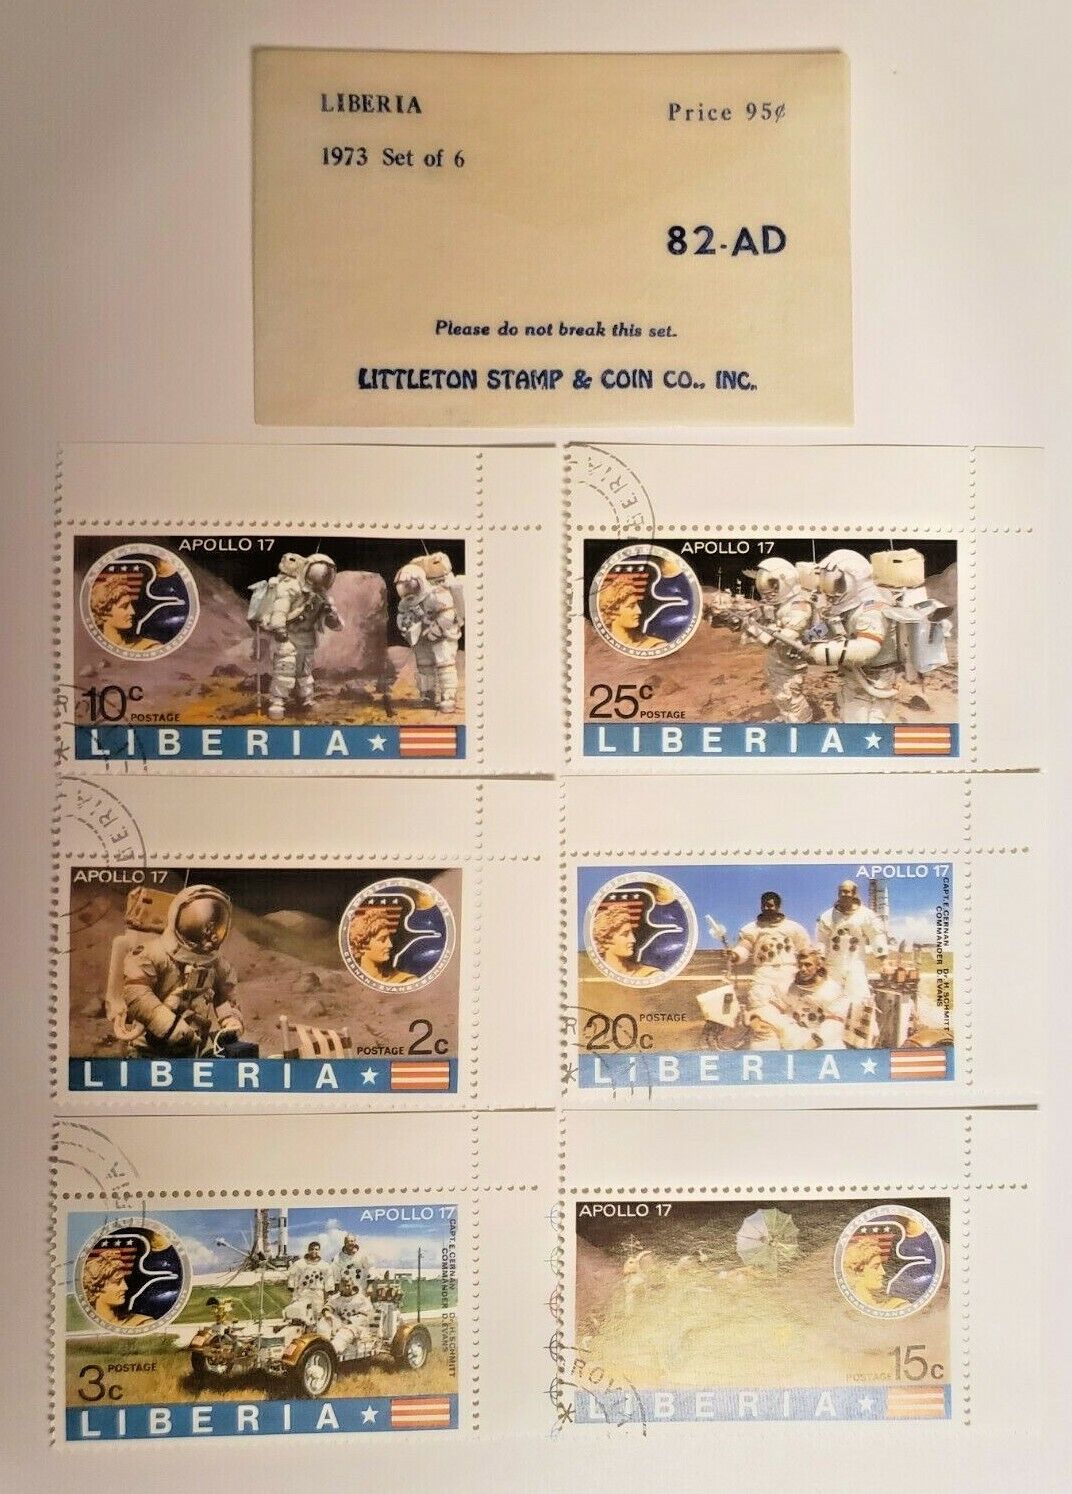 1973 Liberia APOLLO 17 Stamp Set of Six (6) - Littleton Stamp & Coin Co. 82-AD Без бренда